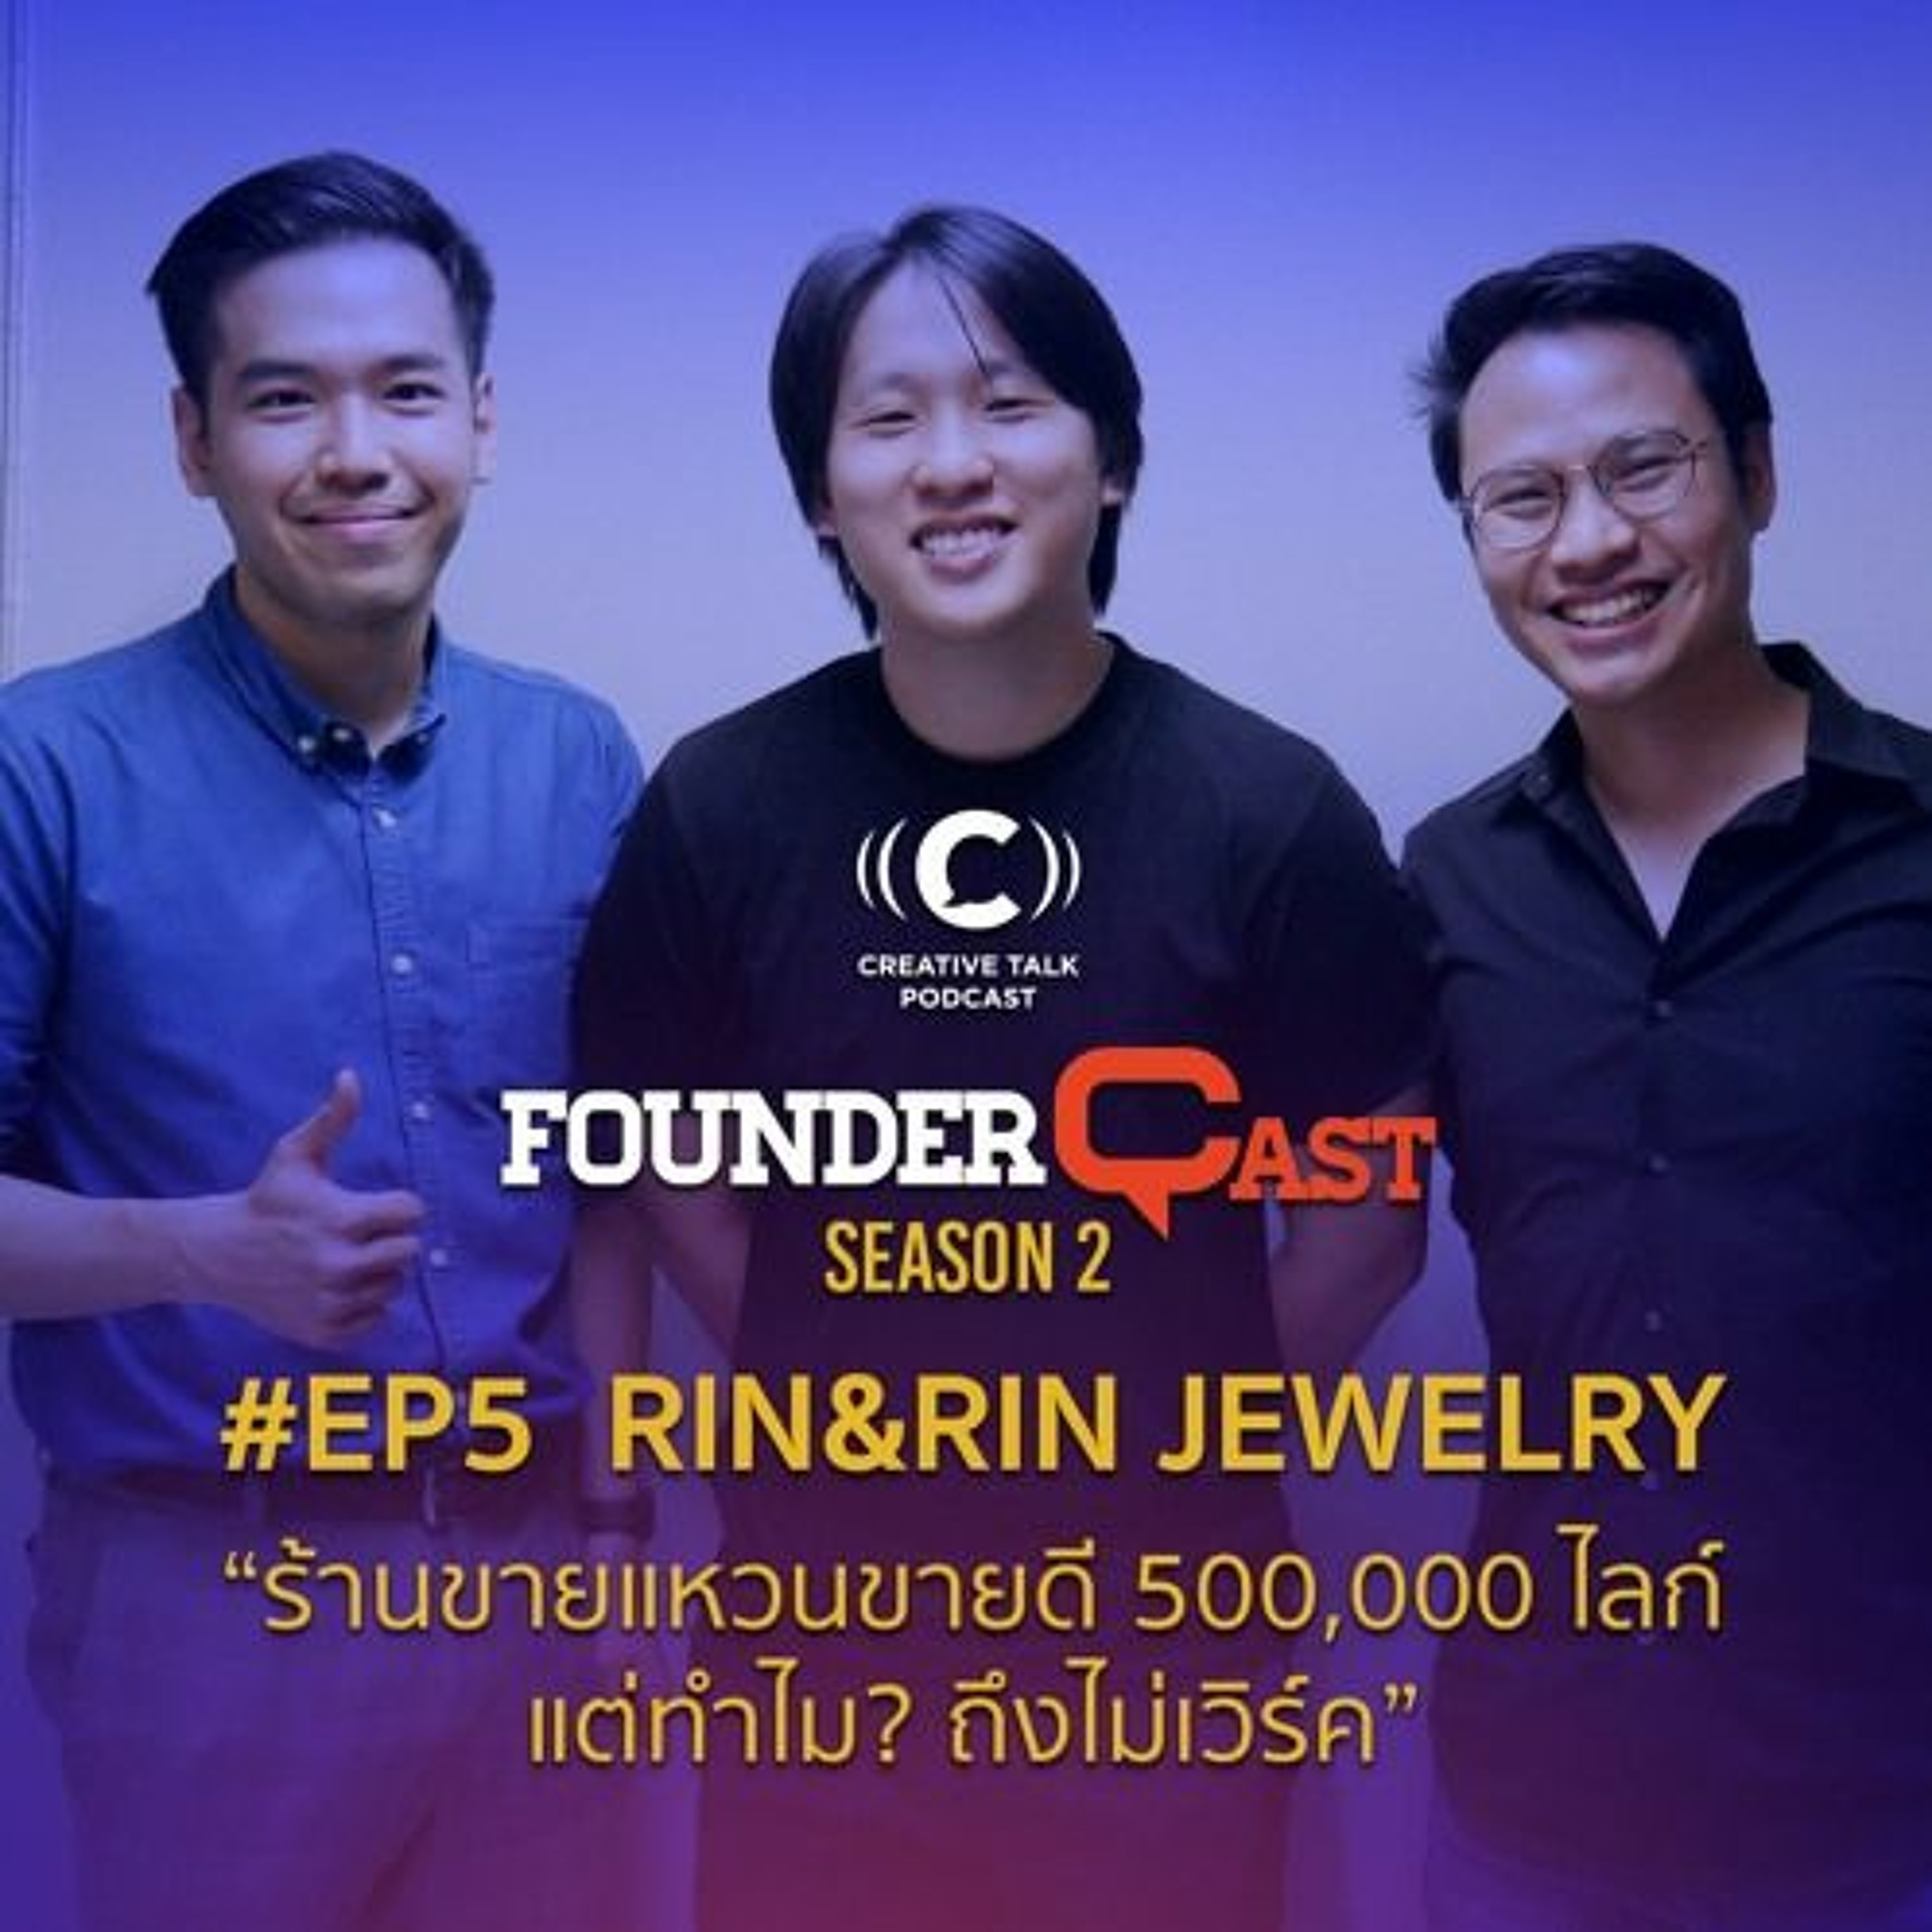 SS2 EP5 : คุยกับคุณแก๊ป CEO & FOUNDER ของ RIN&RIN JEWELRY ร้านขายแหวนขายดีแต่ต้องเลิกทำ